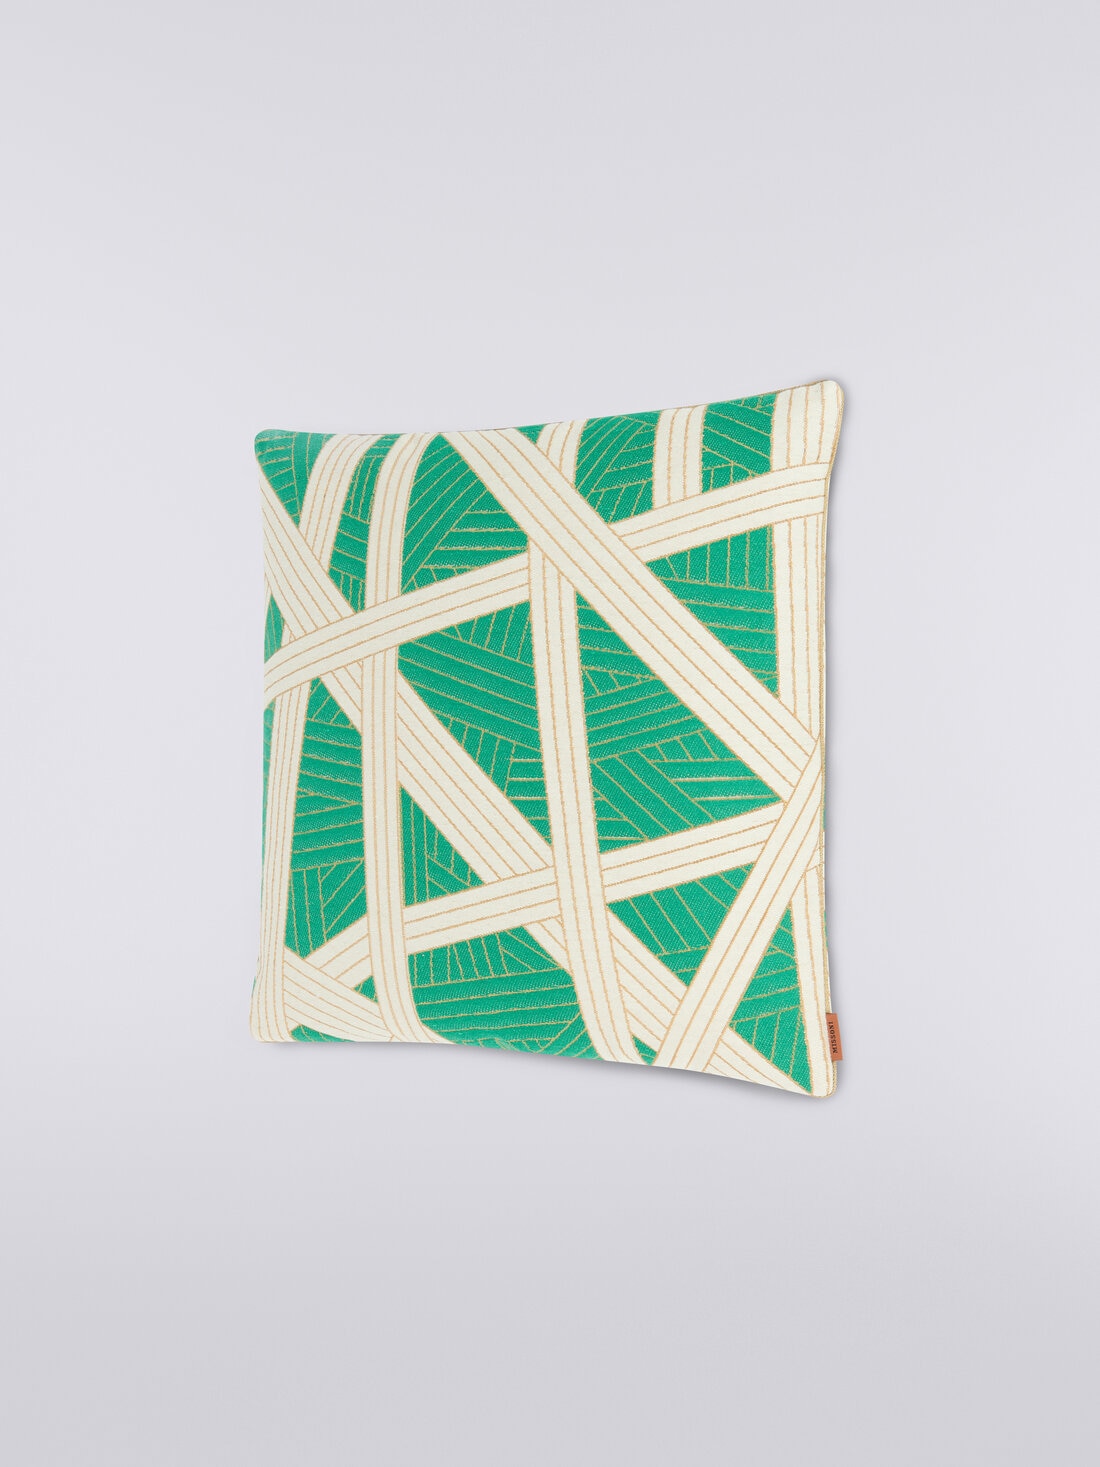 Nastri cushion 40x40 cm with stitching, Multicoloured  - 8051575830549 - 1